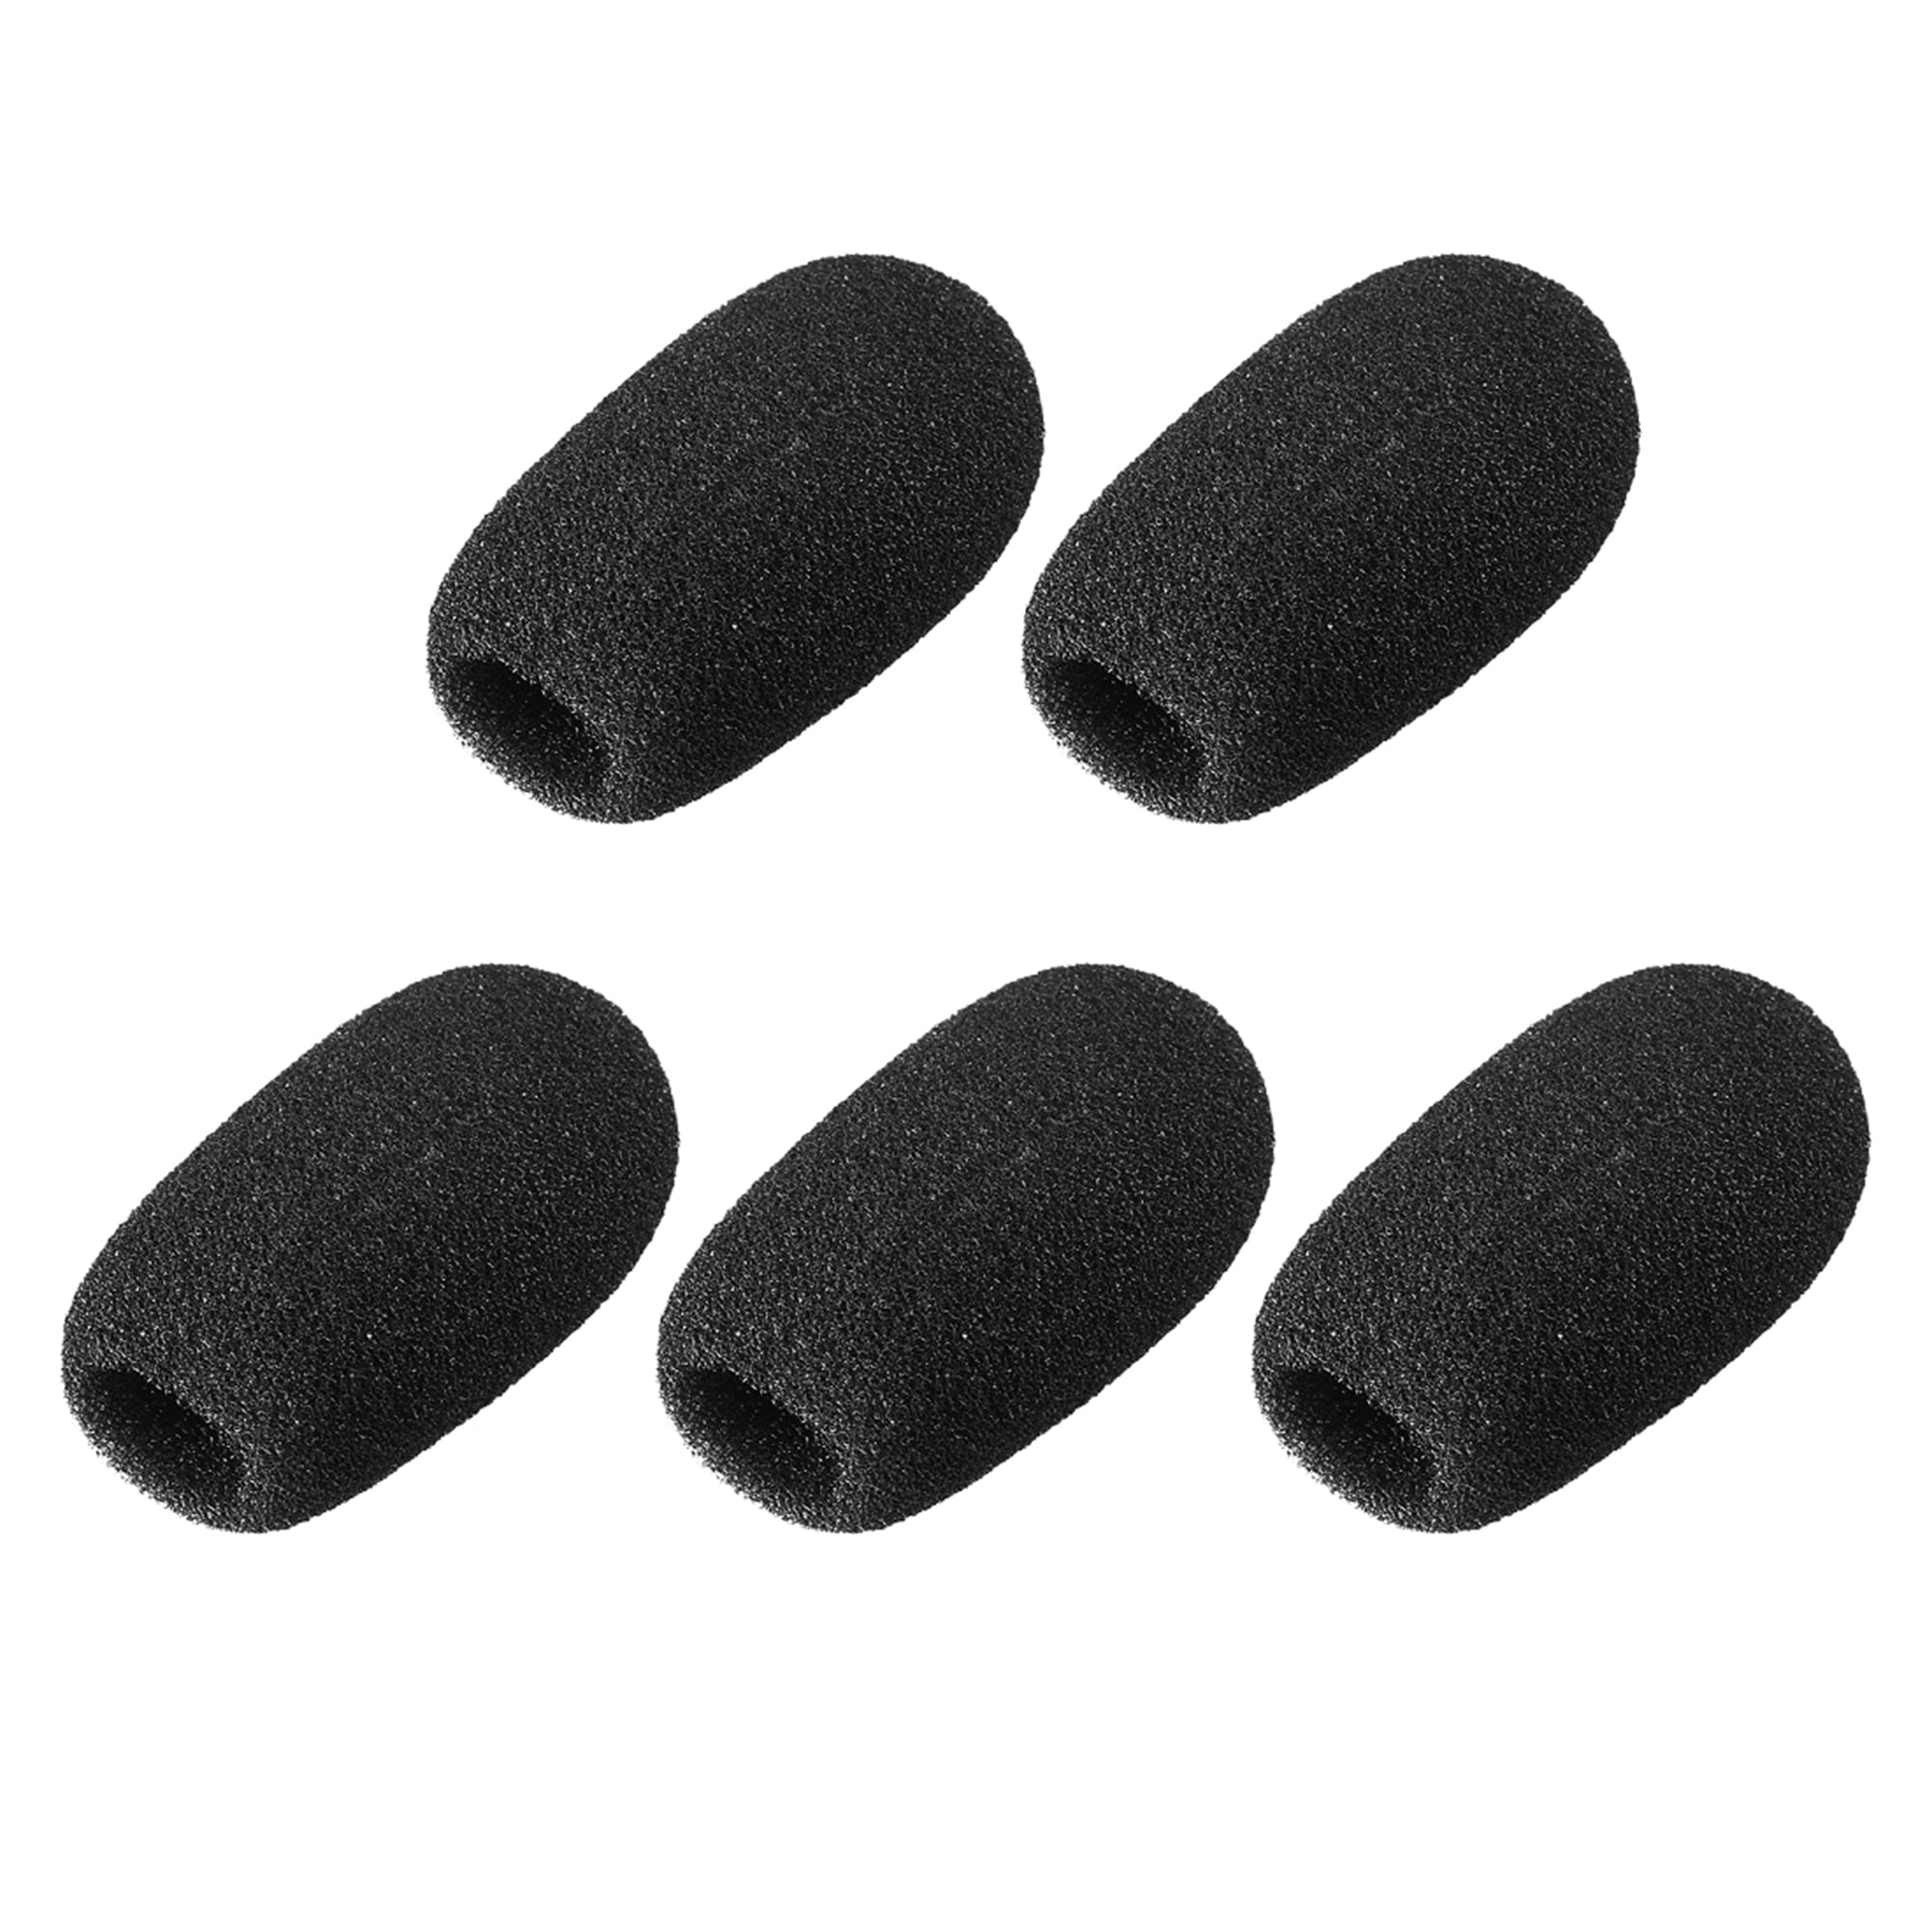 5 PCS Sponge Foam Mic Cover Conference Microphone Windscreen Shield Protection Black 60mm Long